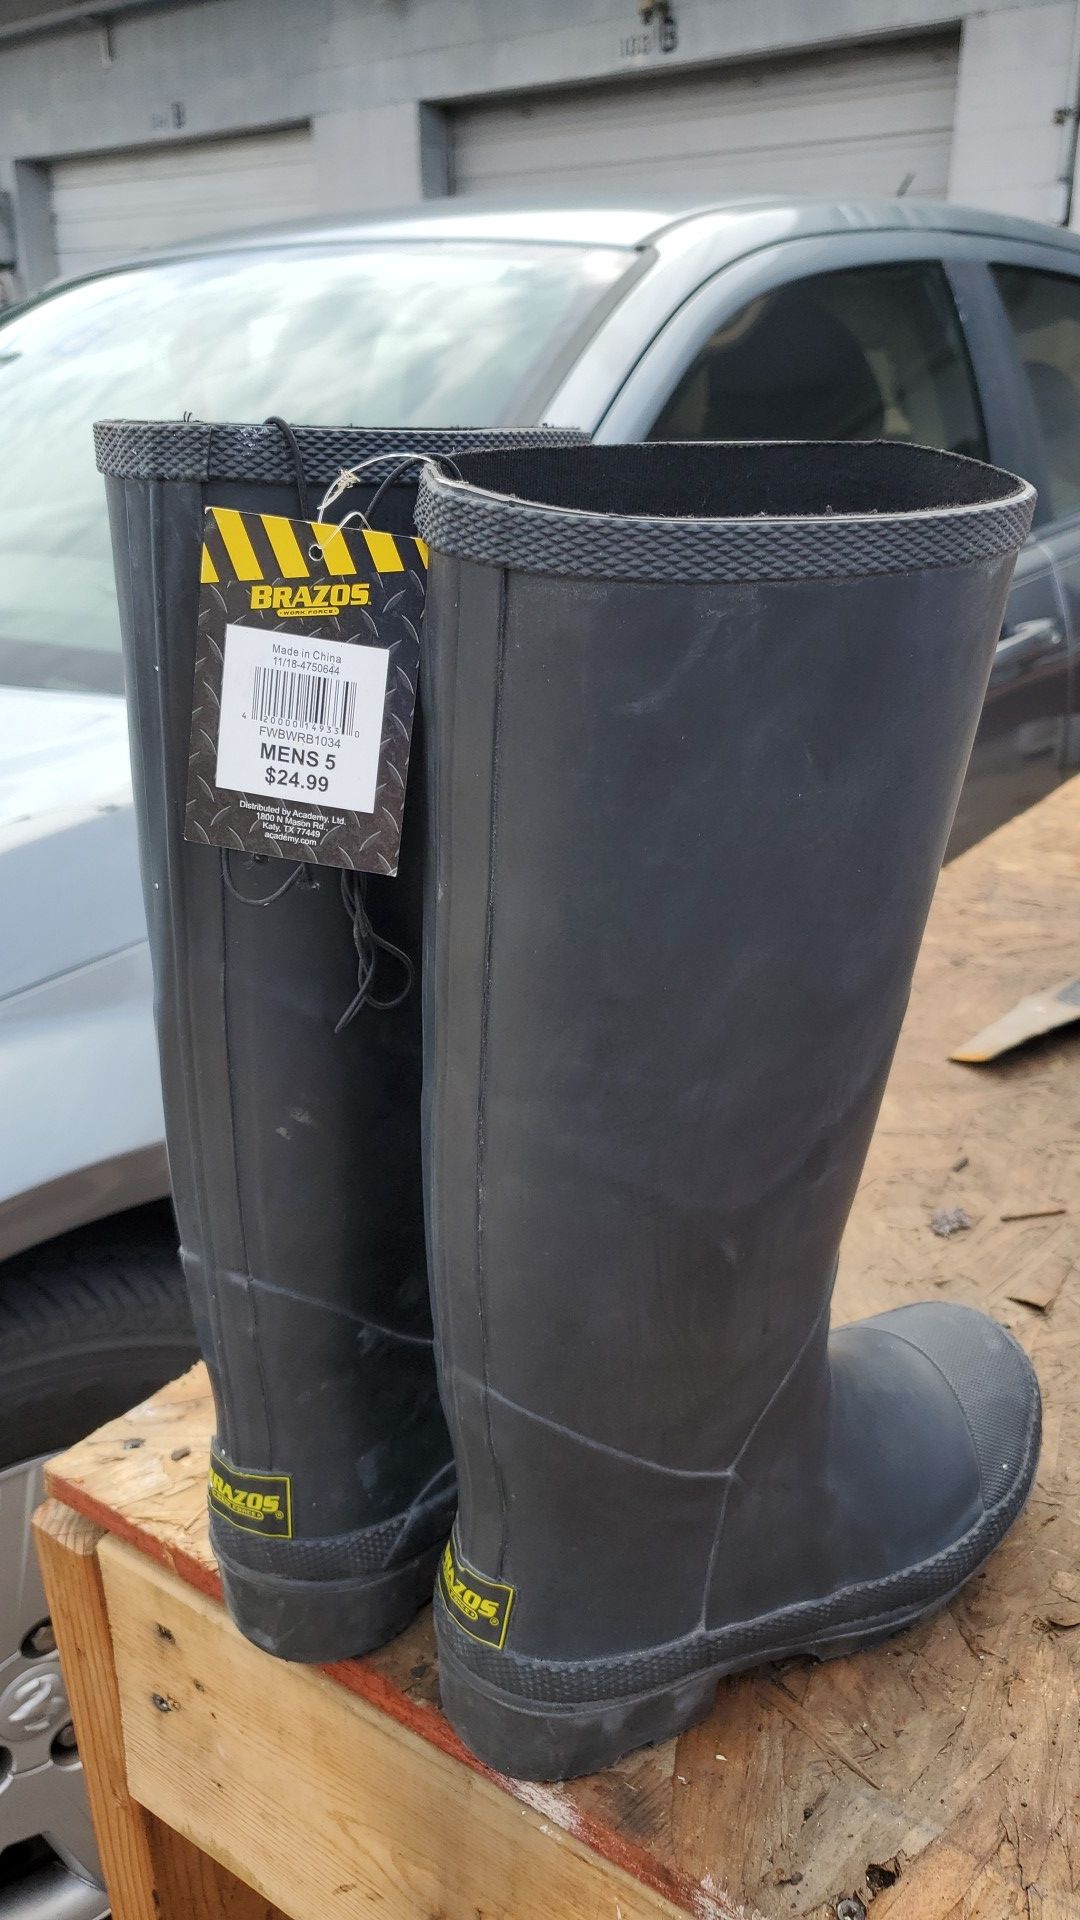 Brazos men's size 5 rubber boots